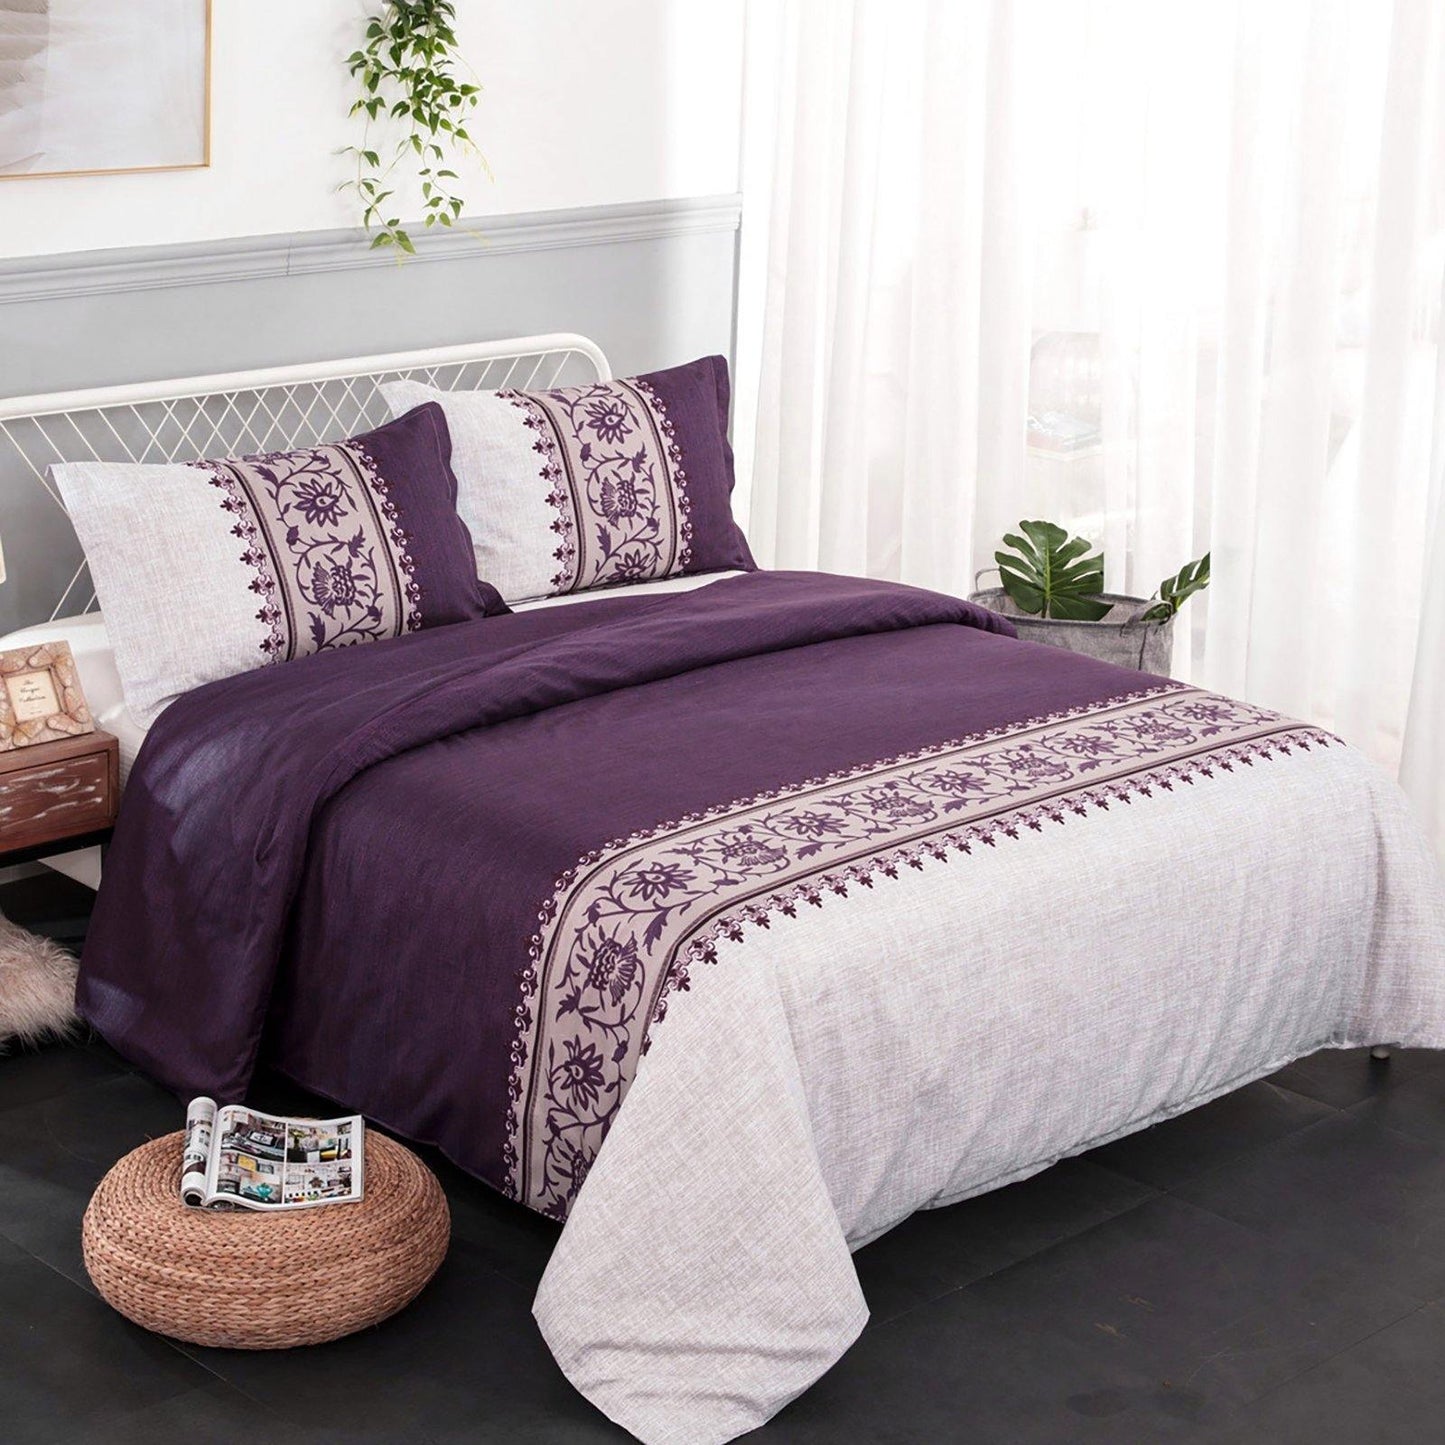 WONGS BEDDING Alternate colors Comforter set 3 Pieces Bedding Comforter with 2 Pillow Cases - Wongs bedding